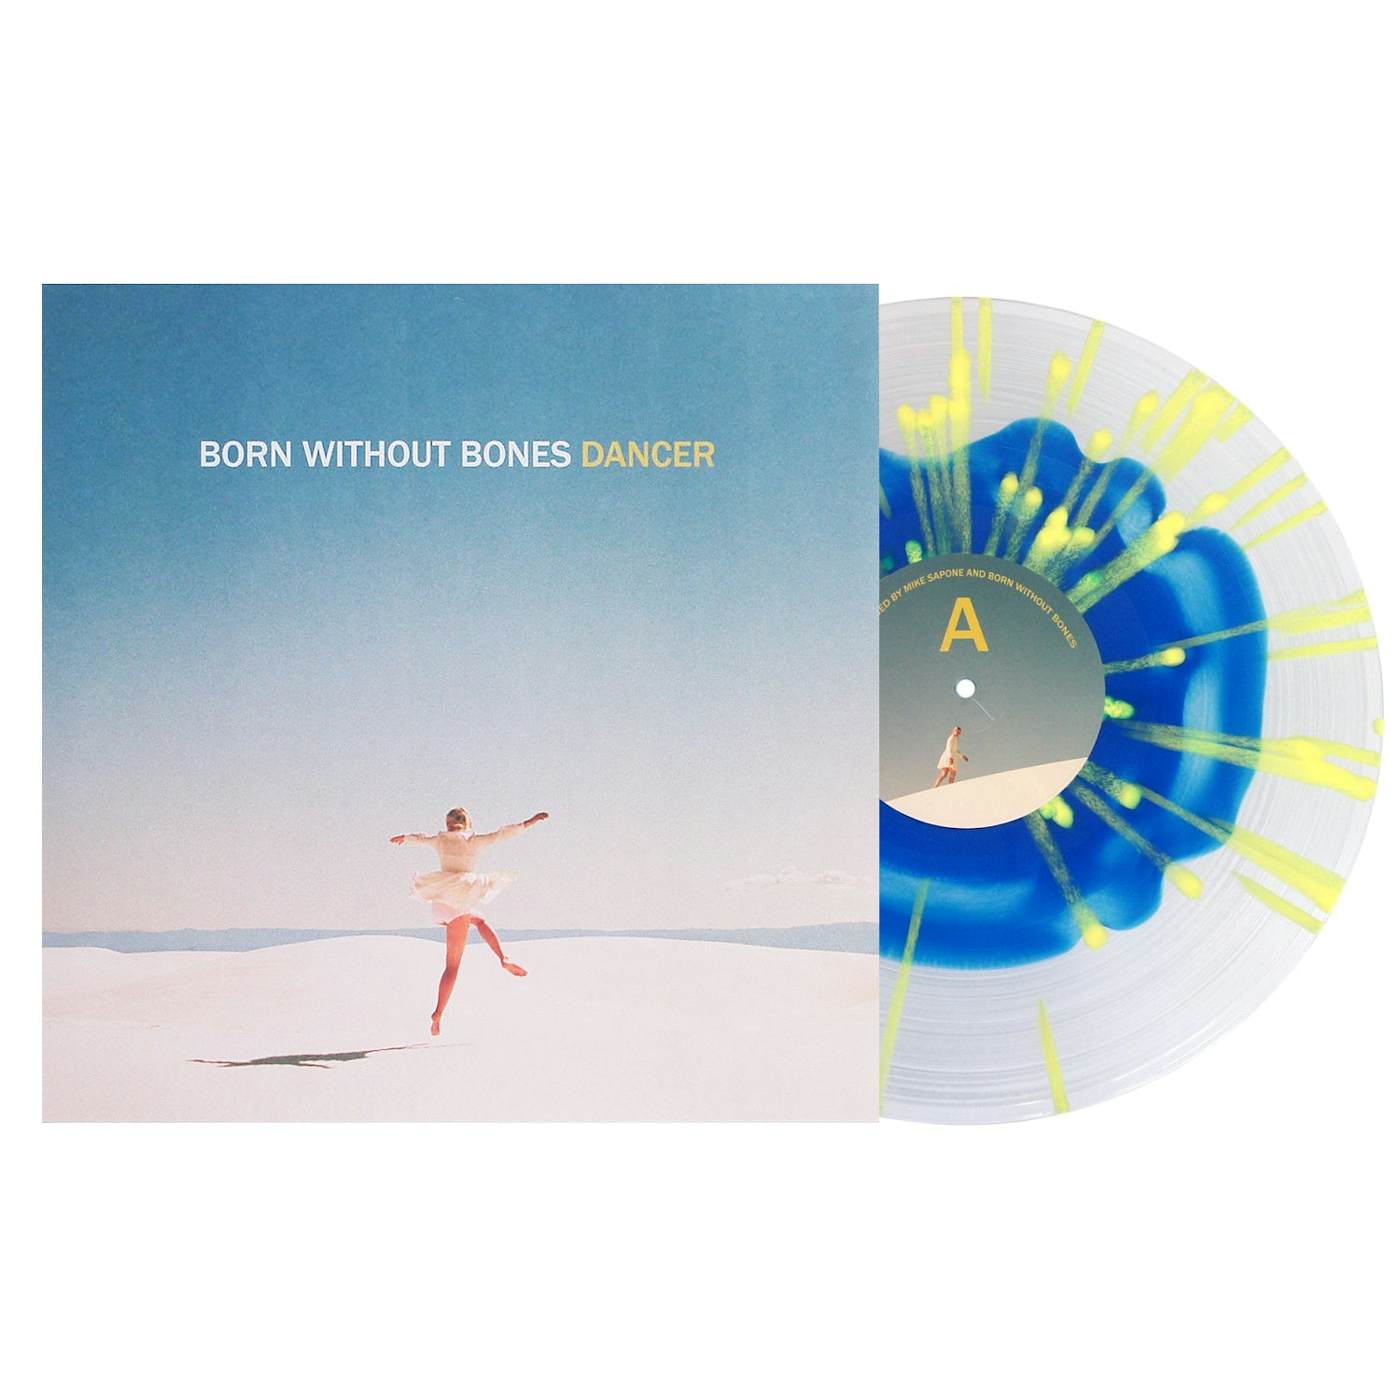 Born Without Bones Dancer 12" Vinyl (Blue in Clear with Splatter)